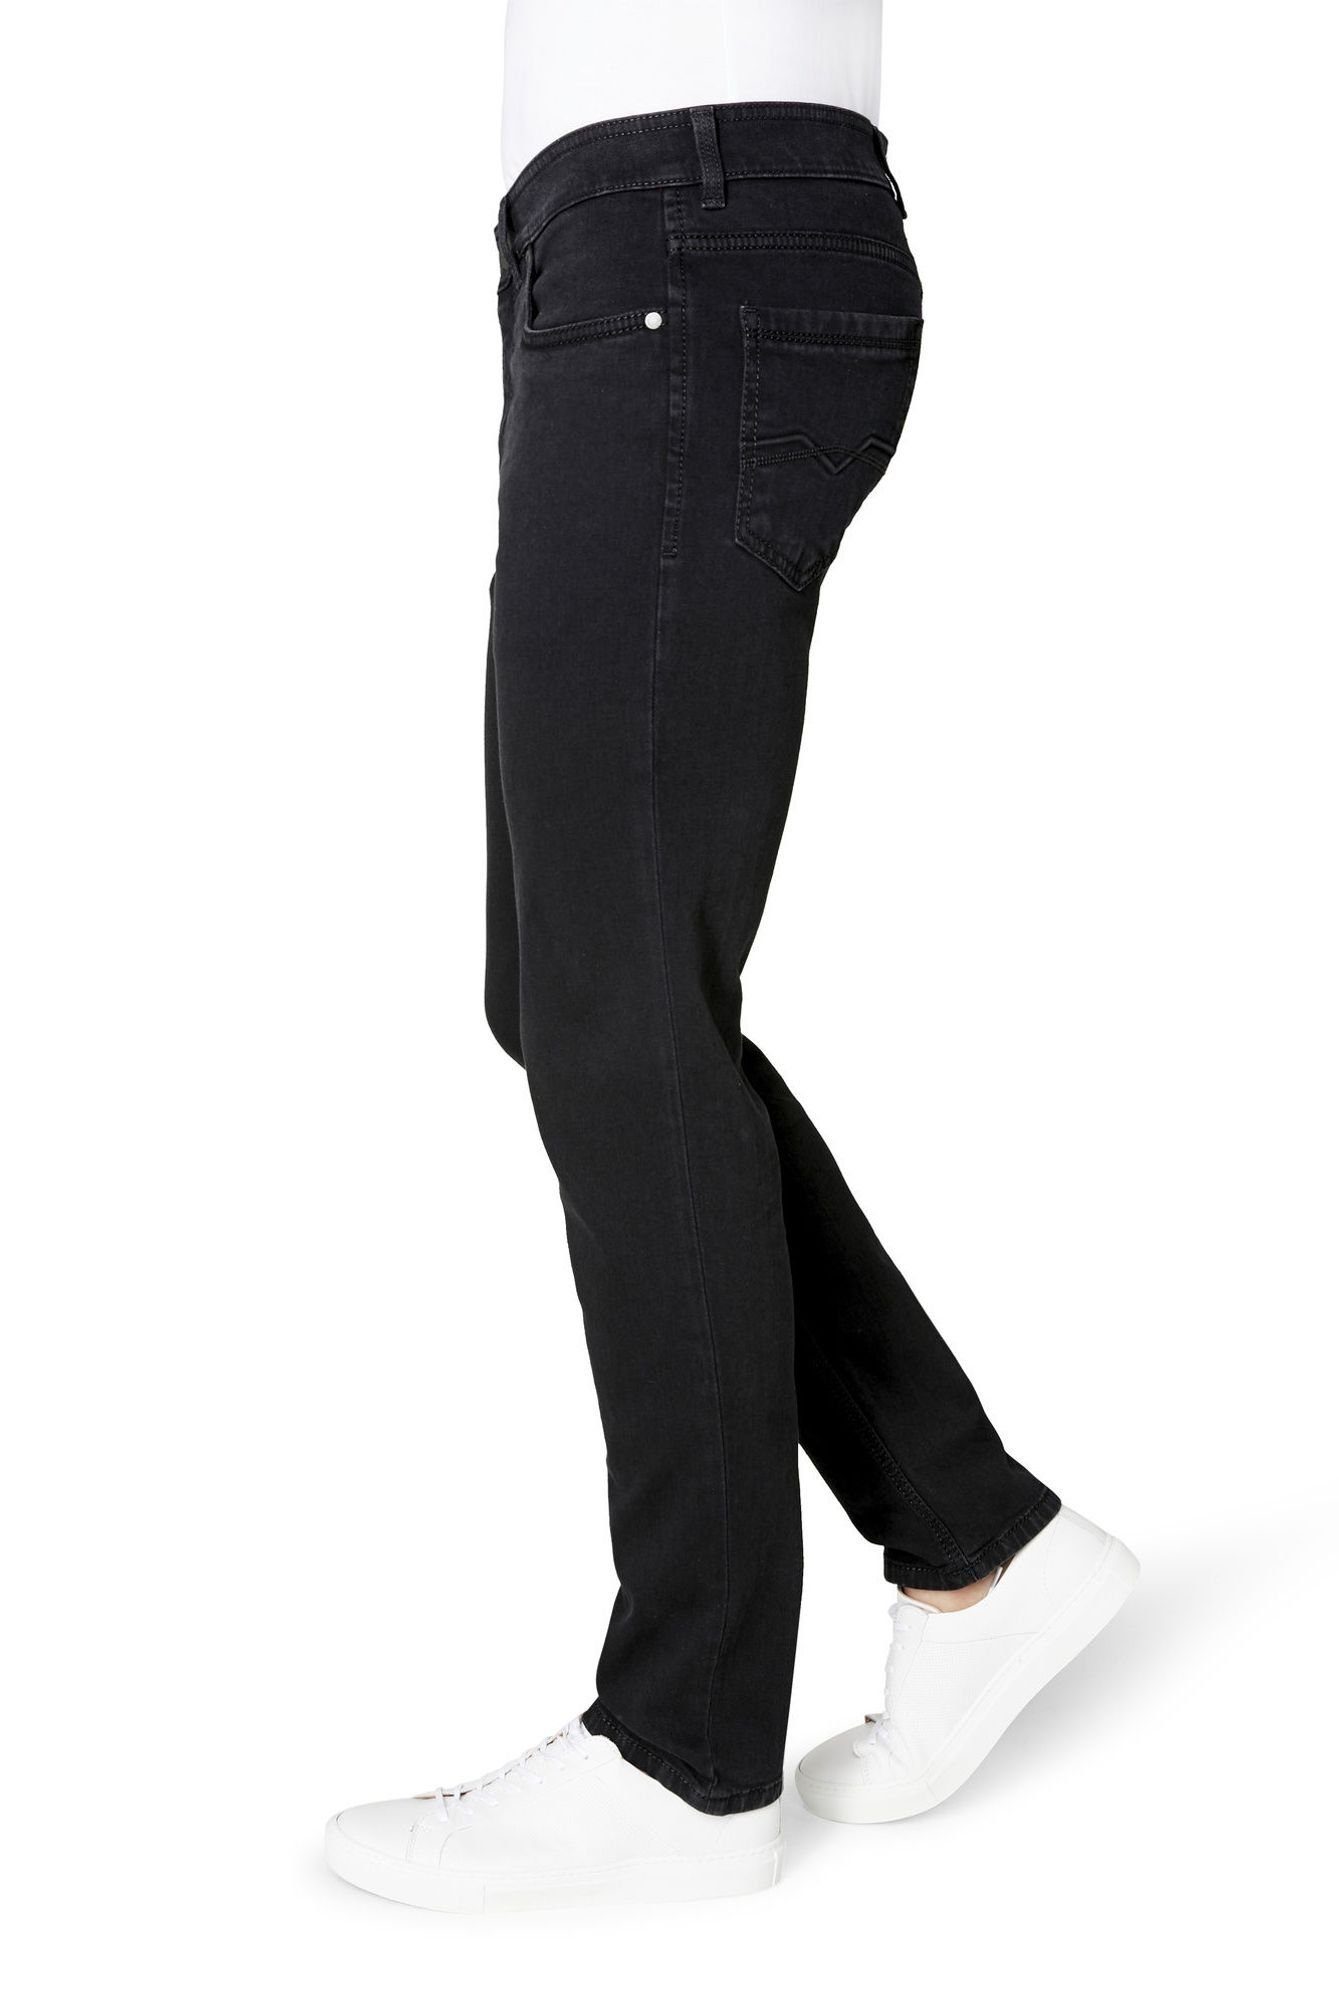 Atelier 5-Pocket-Jeans GARDEUR black Batu-2 Superflex Denim faded